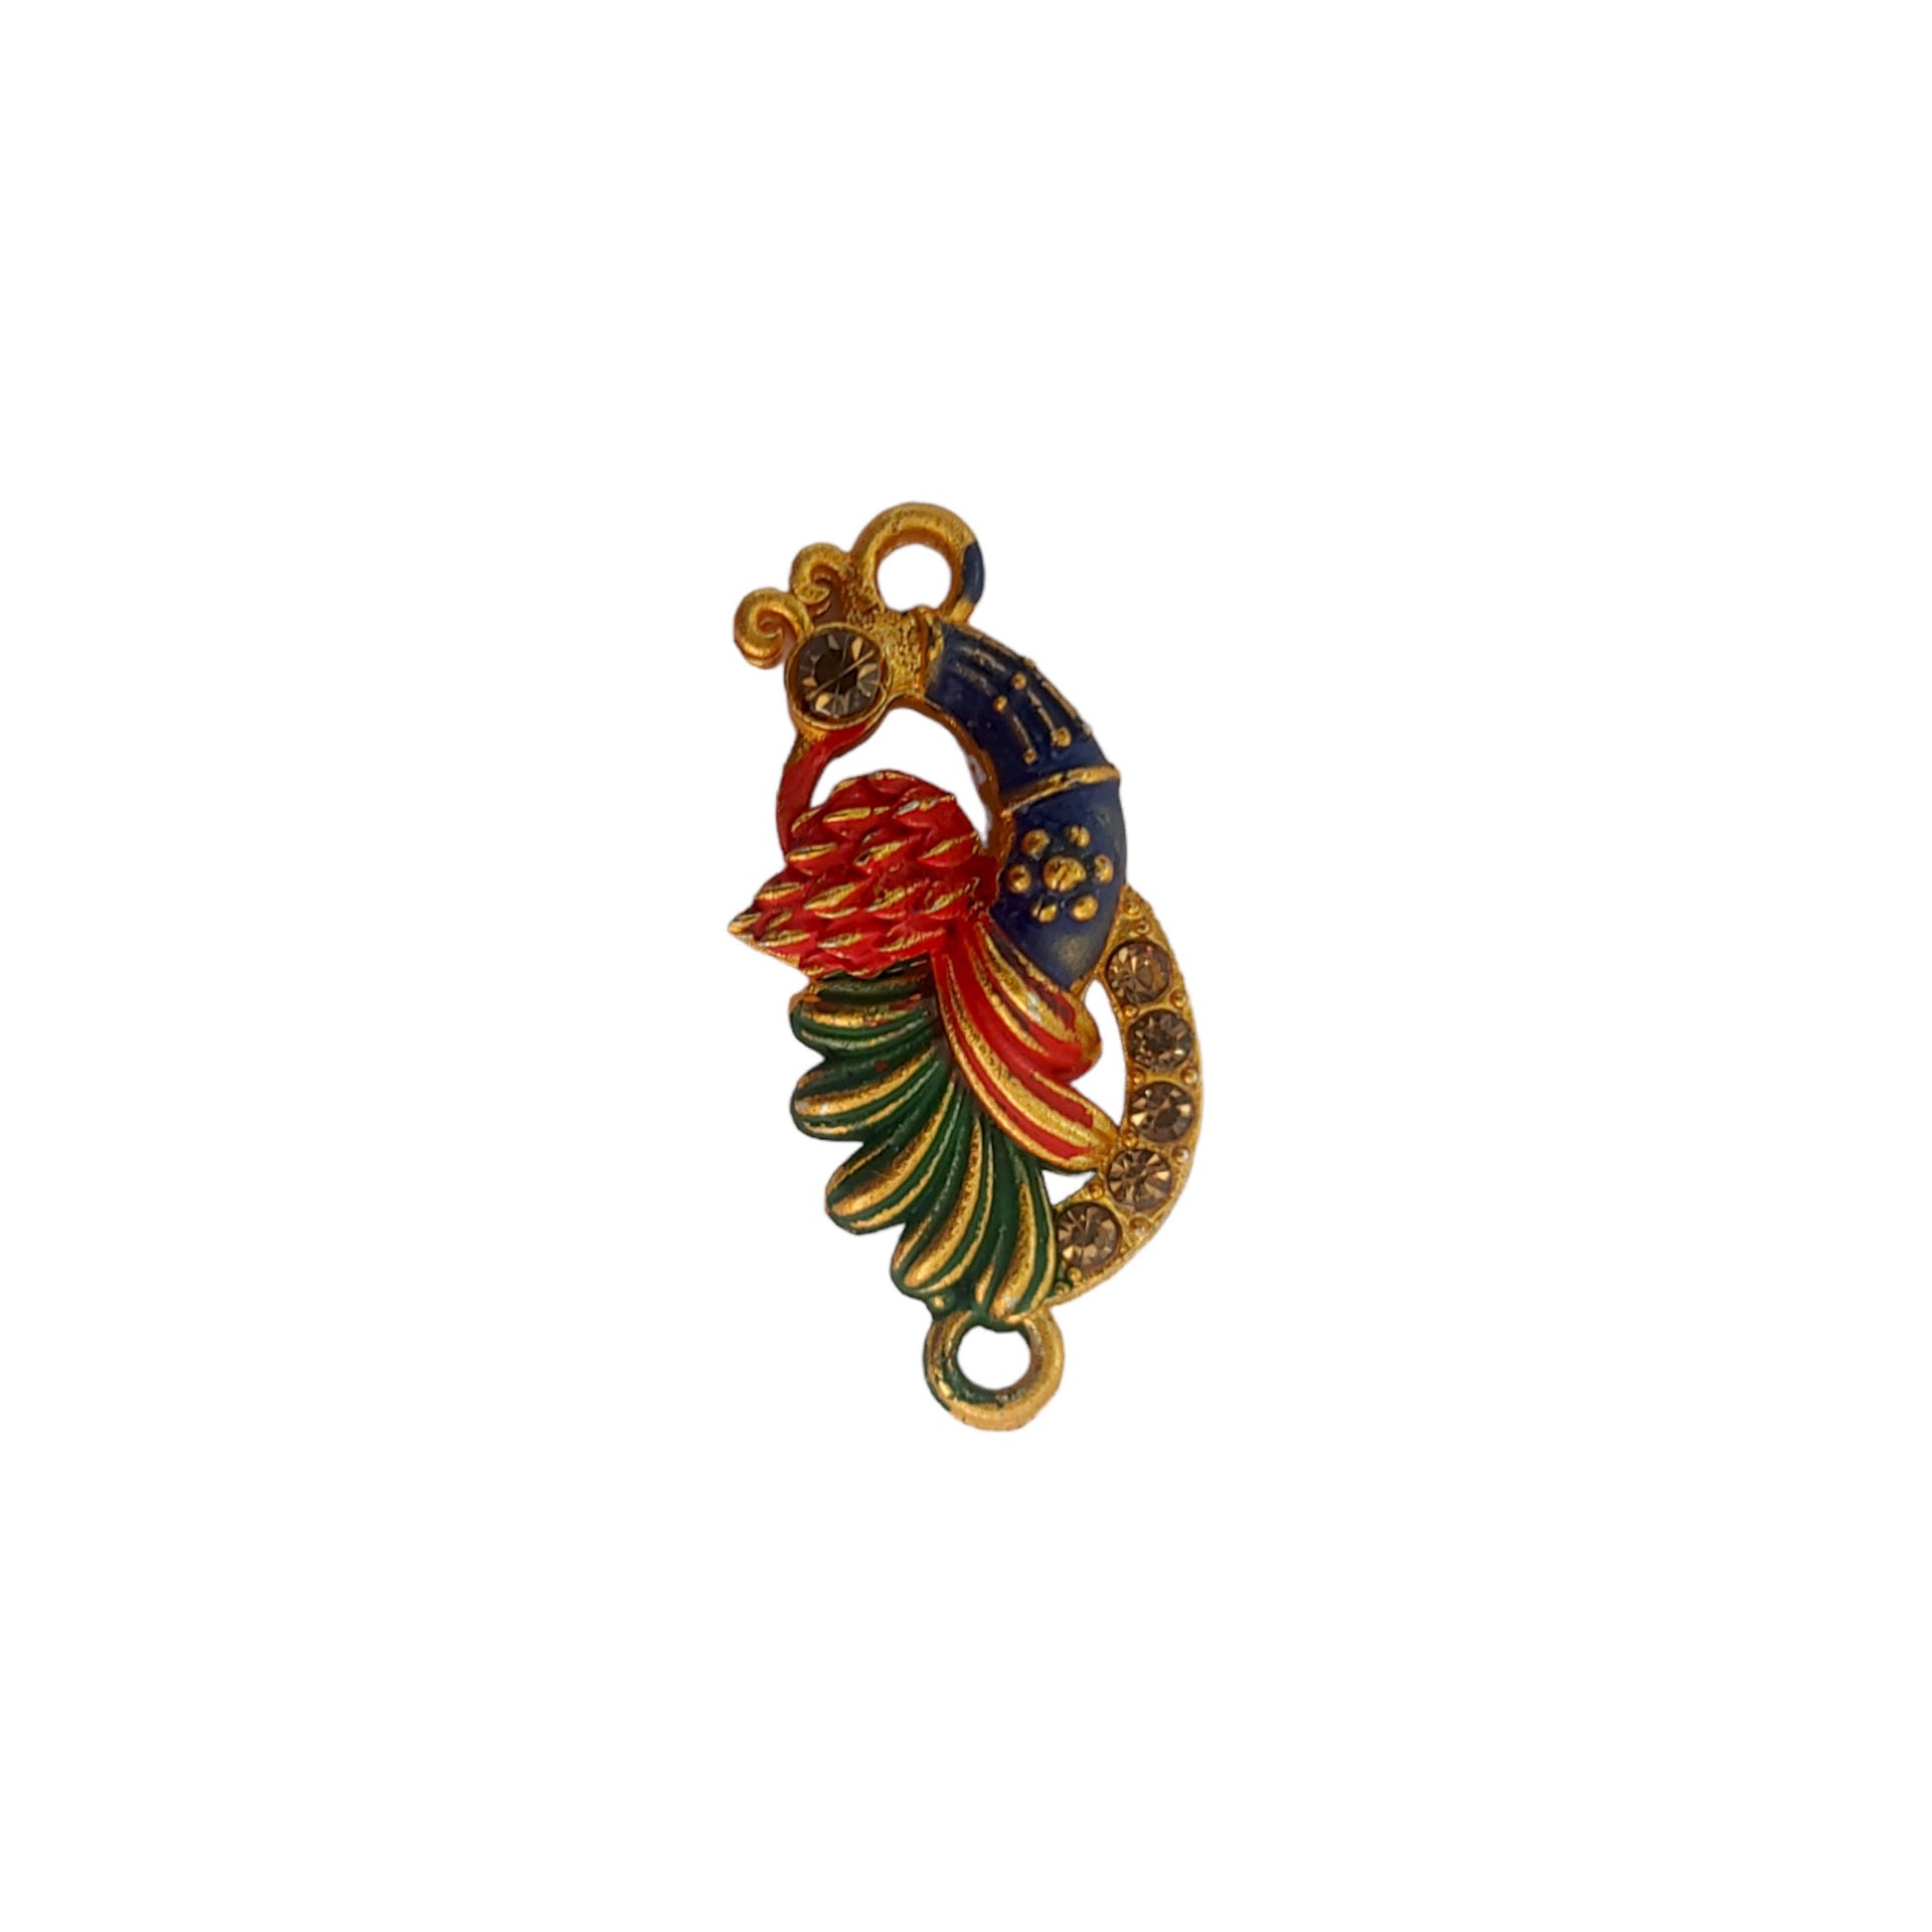 Indian Petals Peacock Style Metal Mazak Motif Pendant for Rakhi, Jewelry designing and Craft Making or Décor